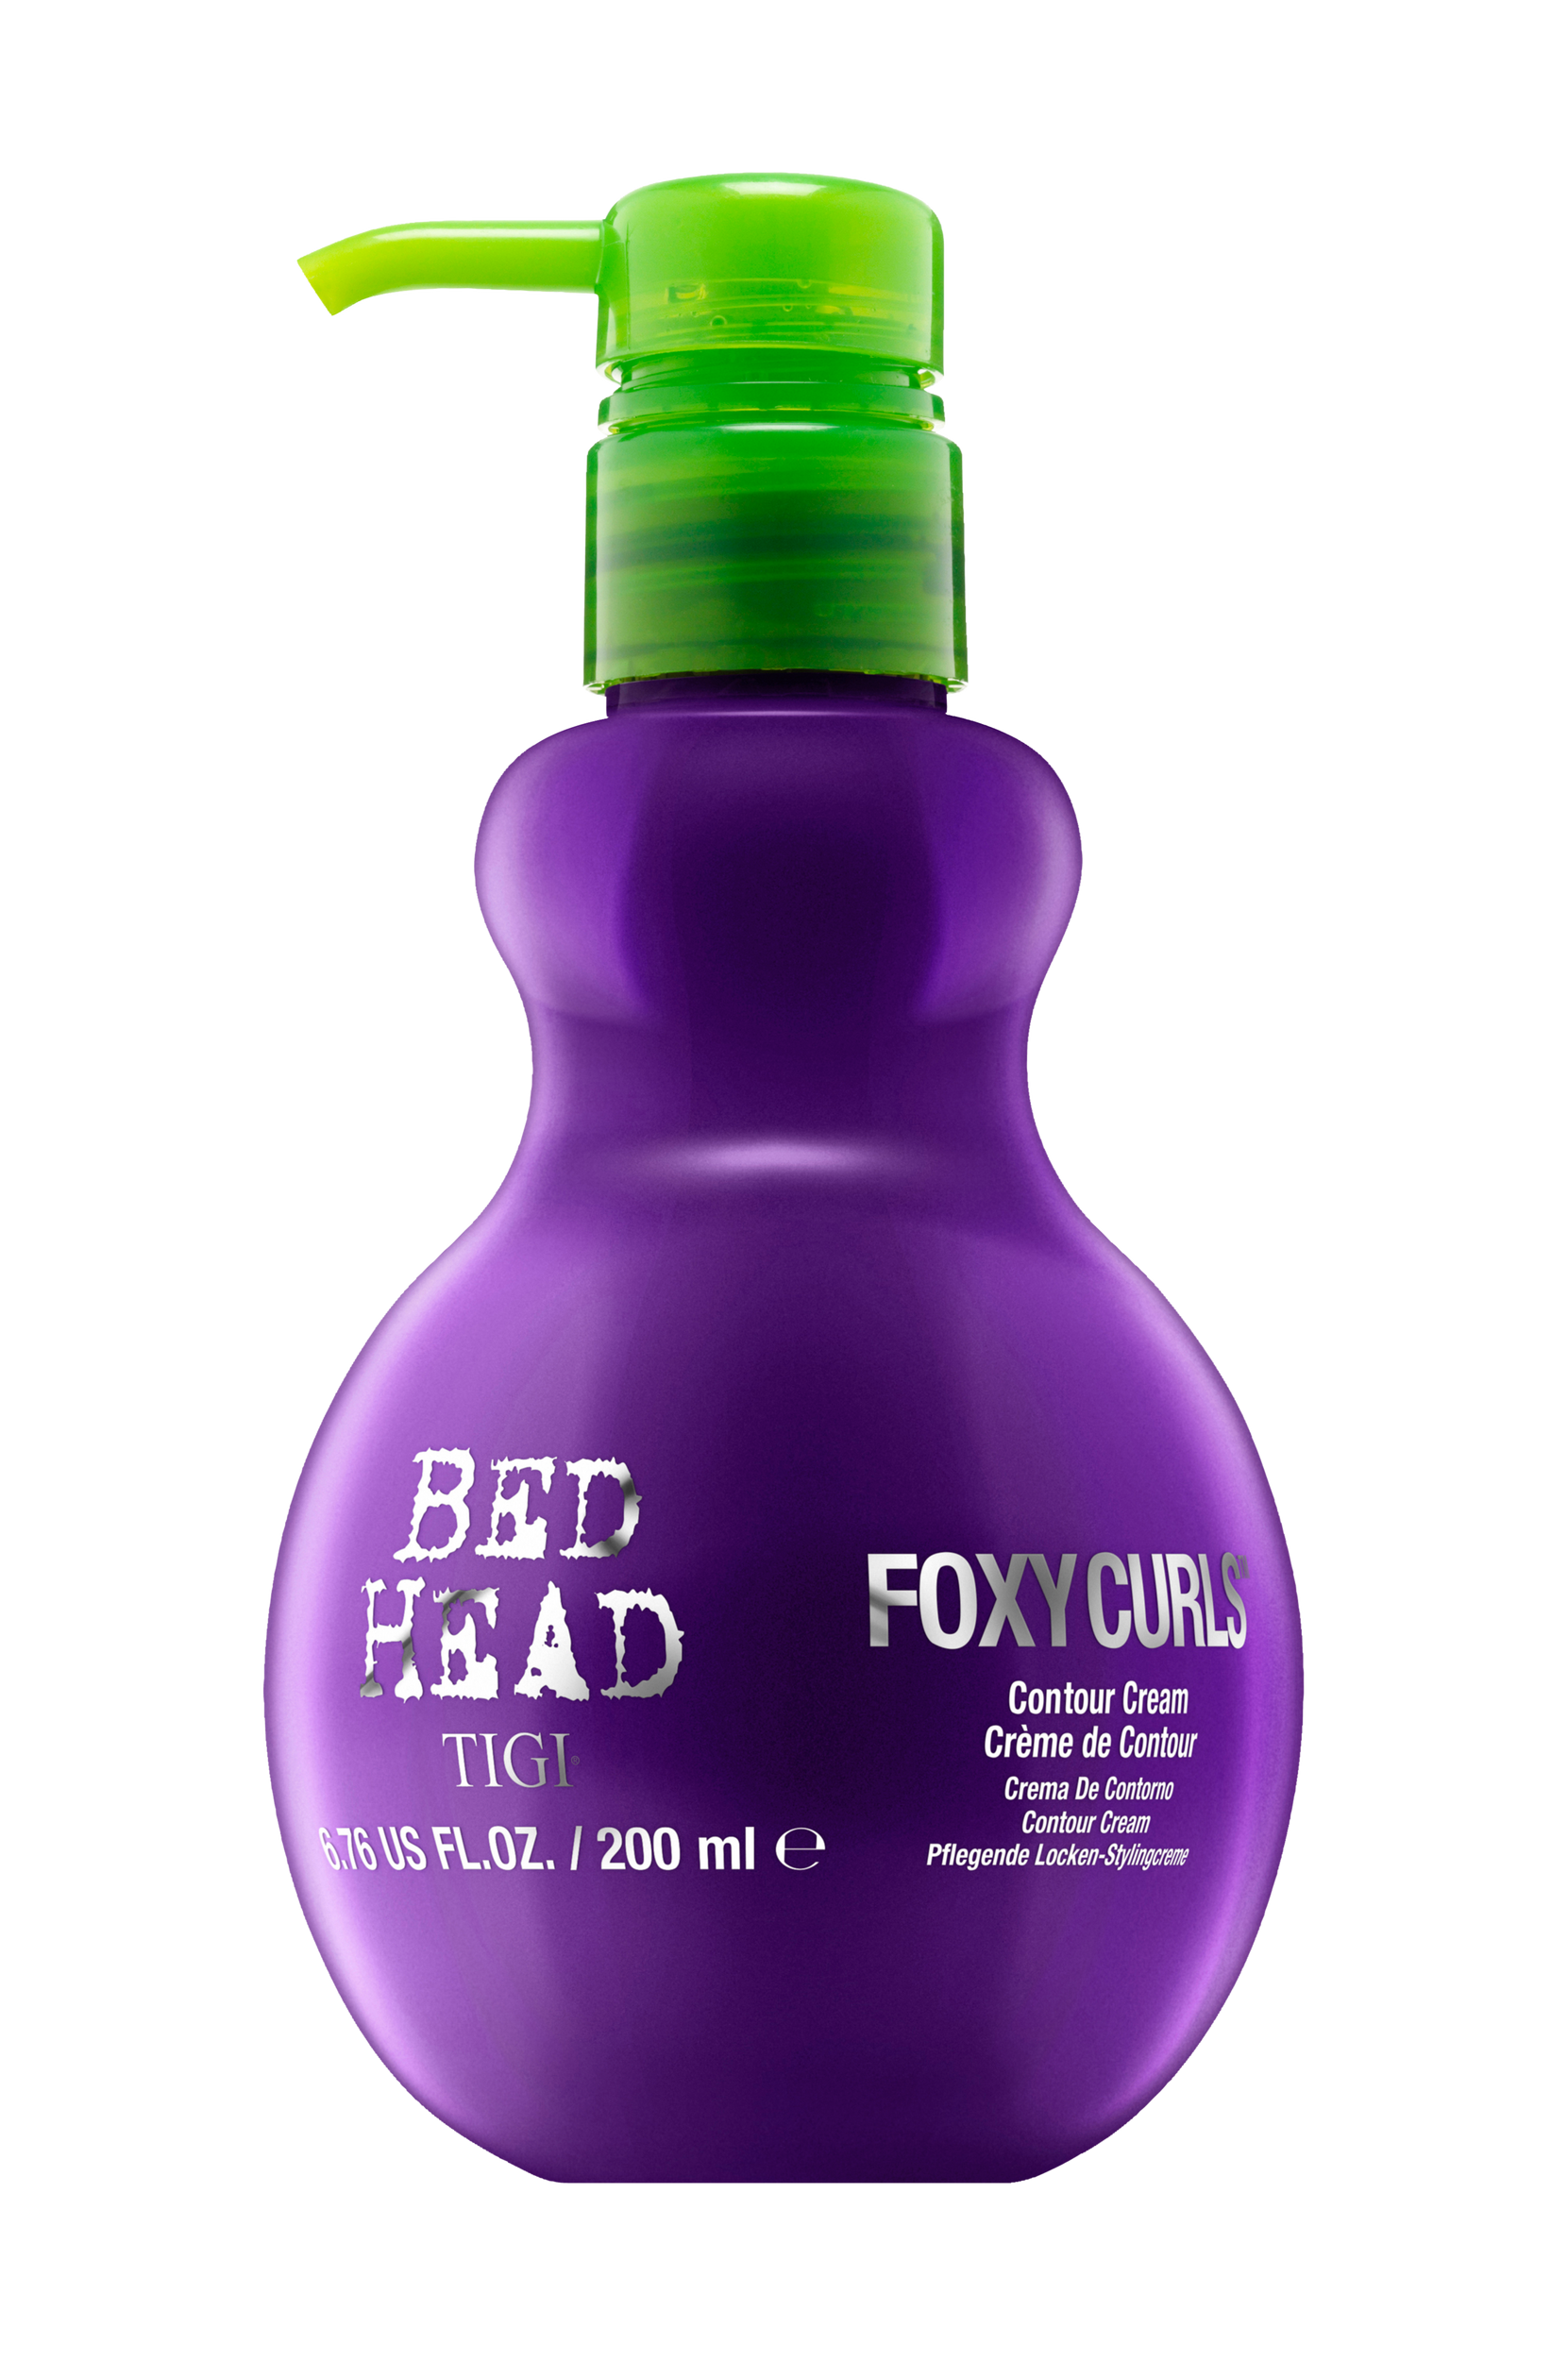 Foxy Curls Contour Cream 200 ml, Tigi